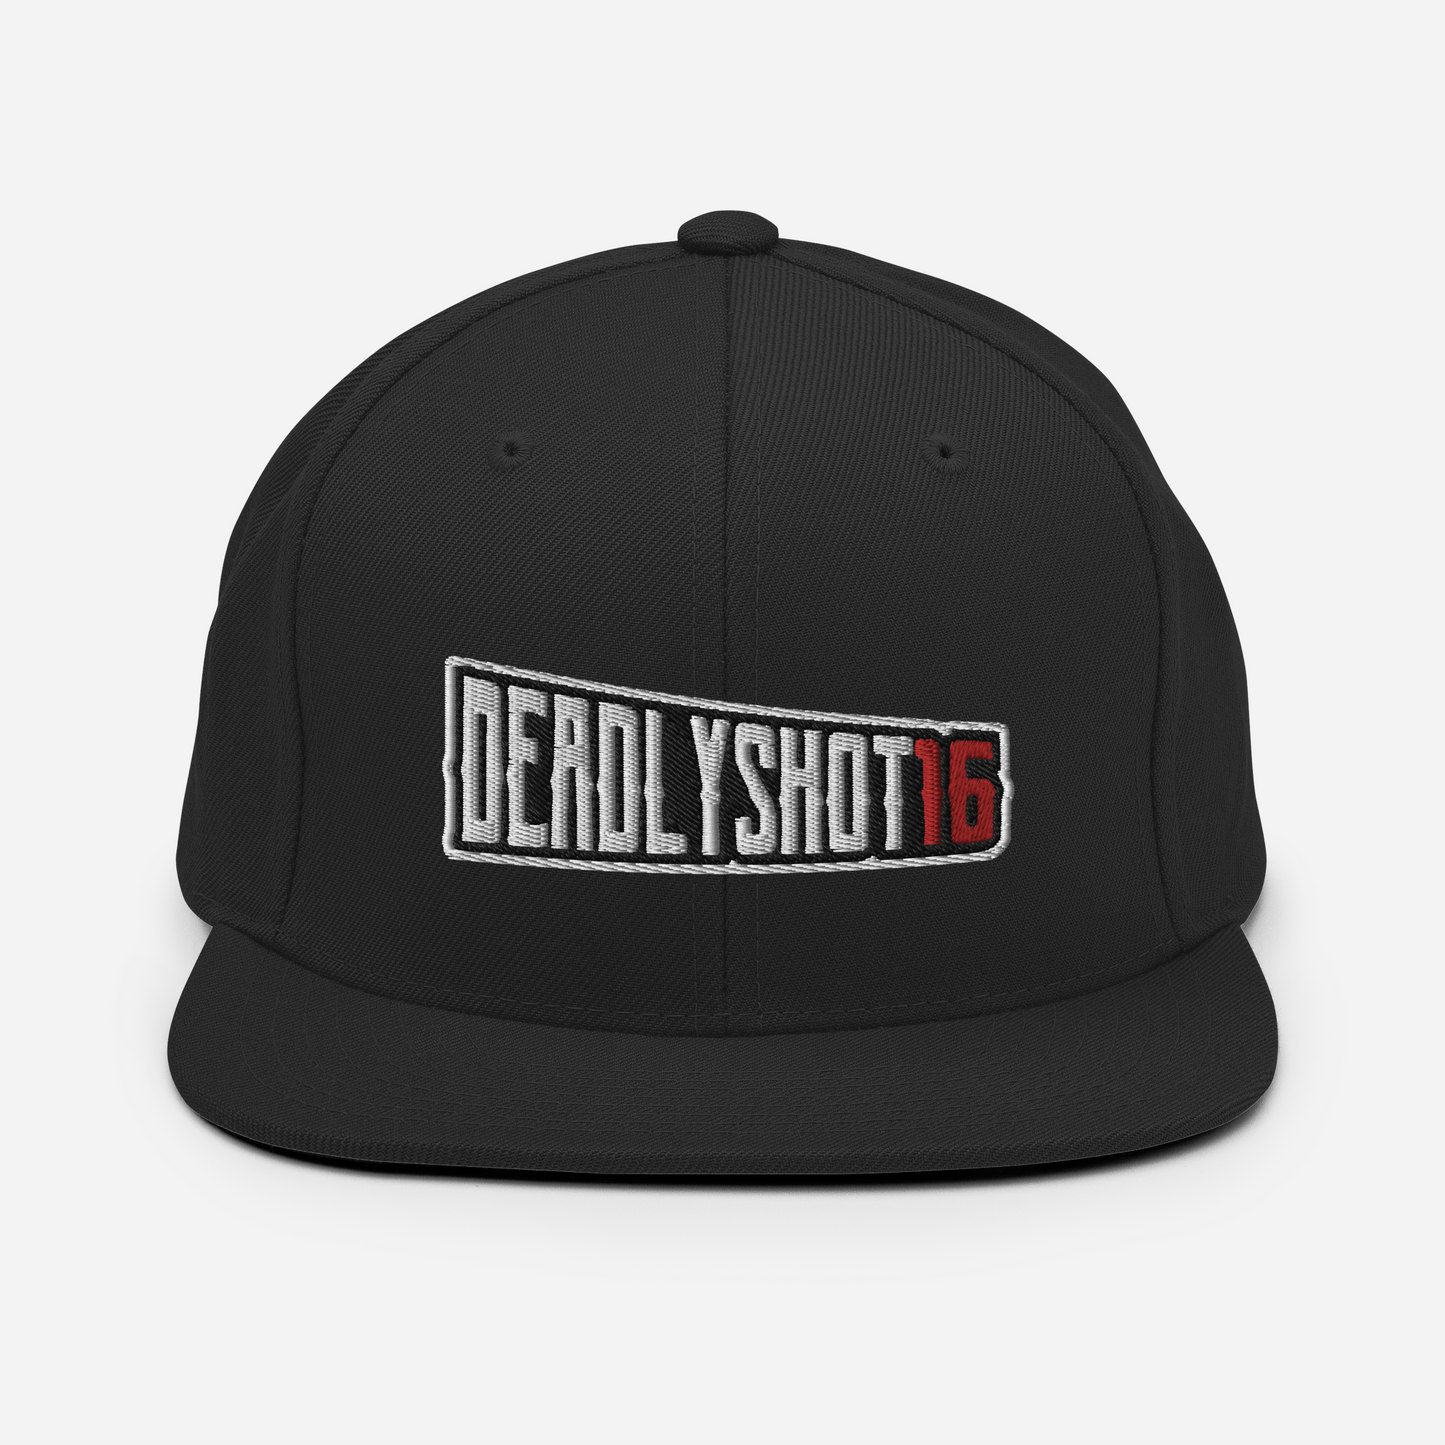 Deadlyshot16 Snapback Hat